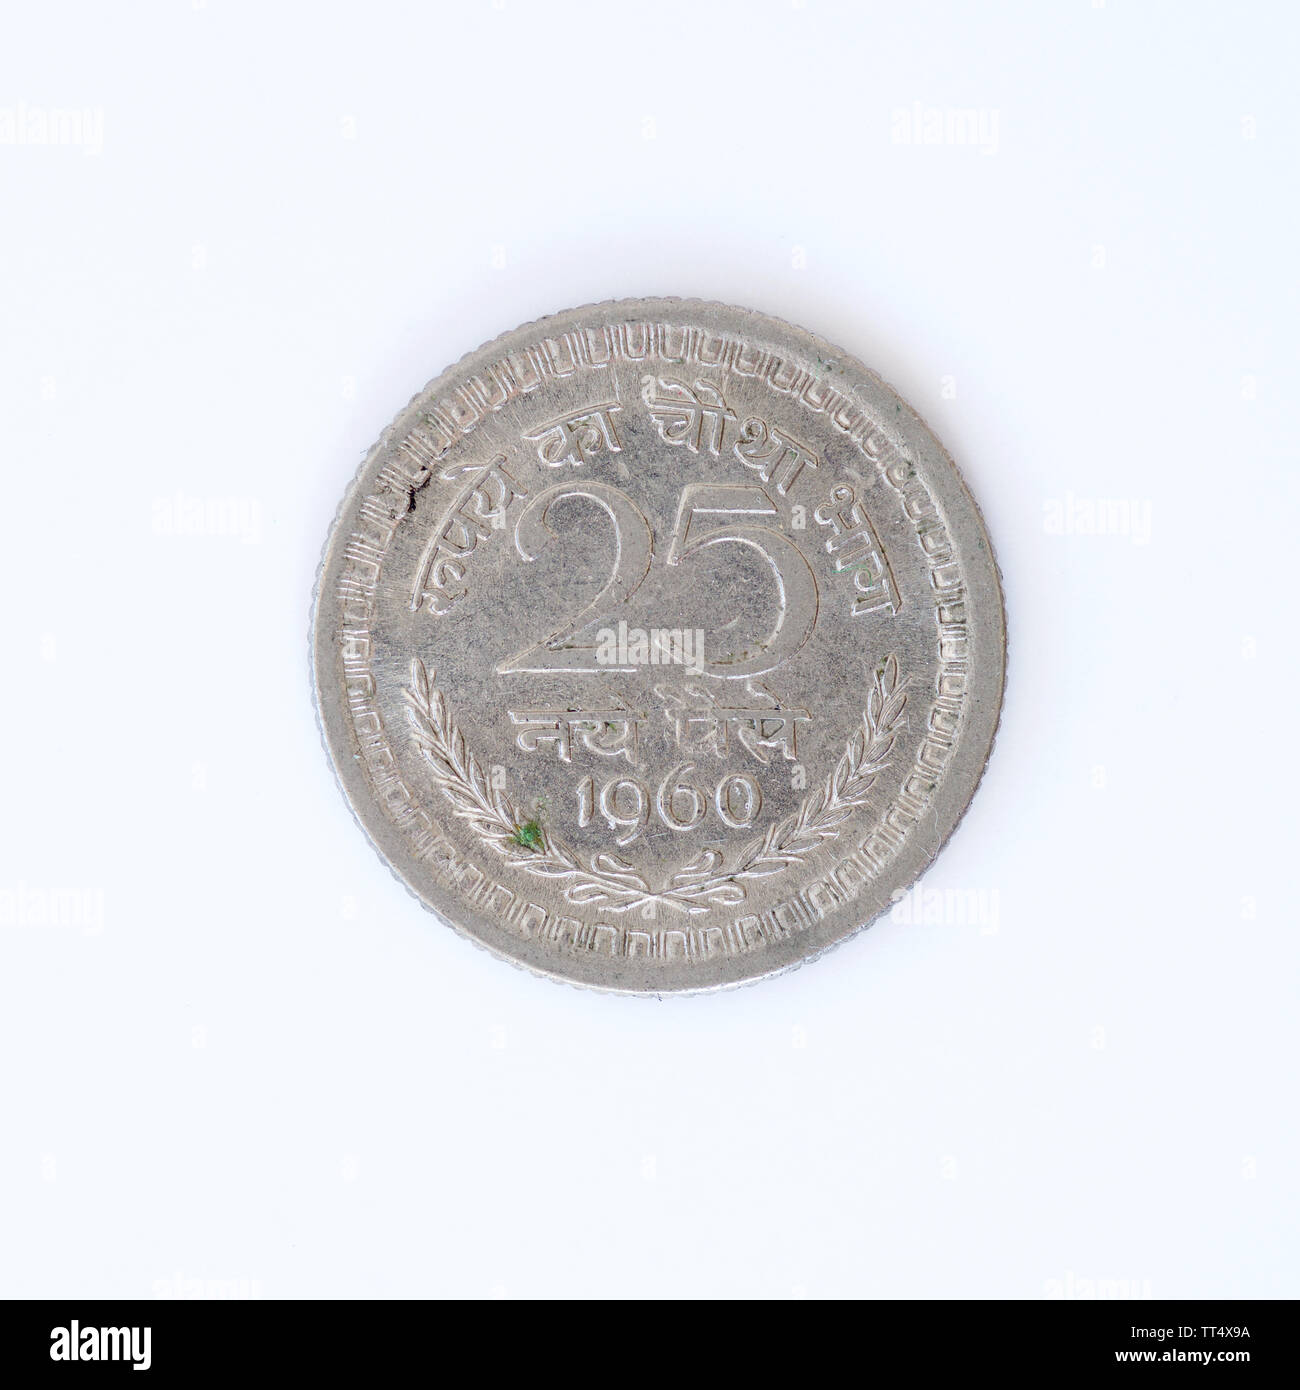 India 25 Naye Paise Coin - 1960 Stock Photo - Alamy